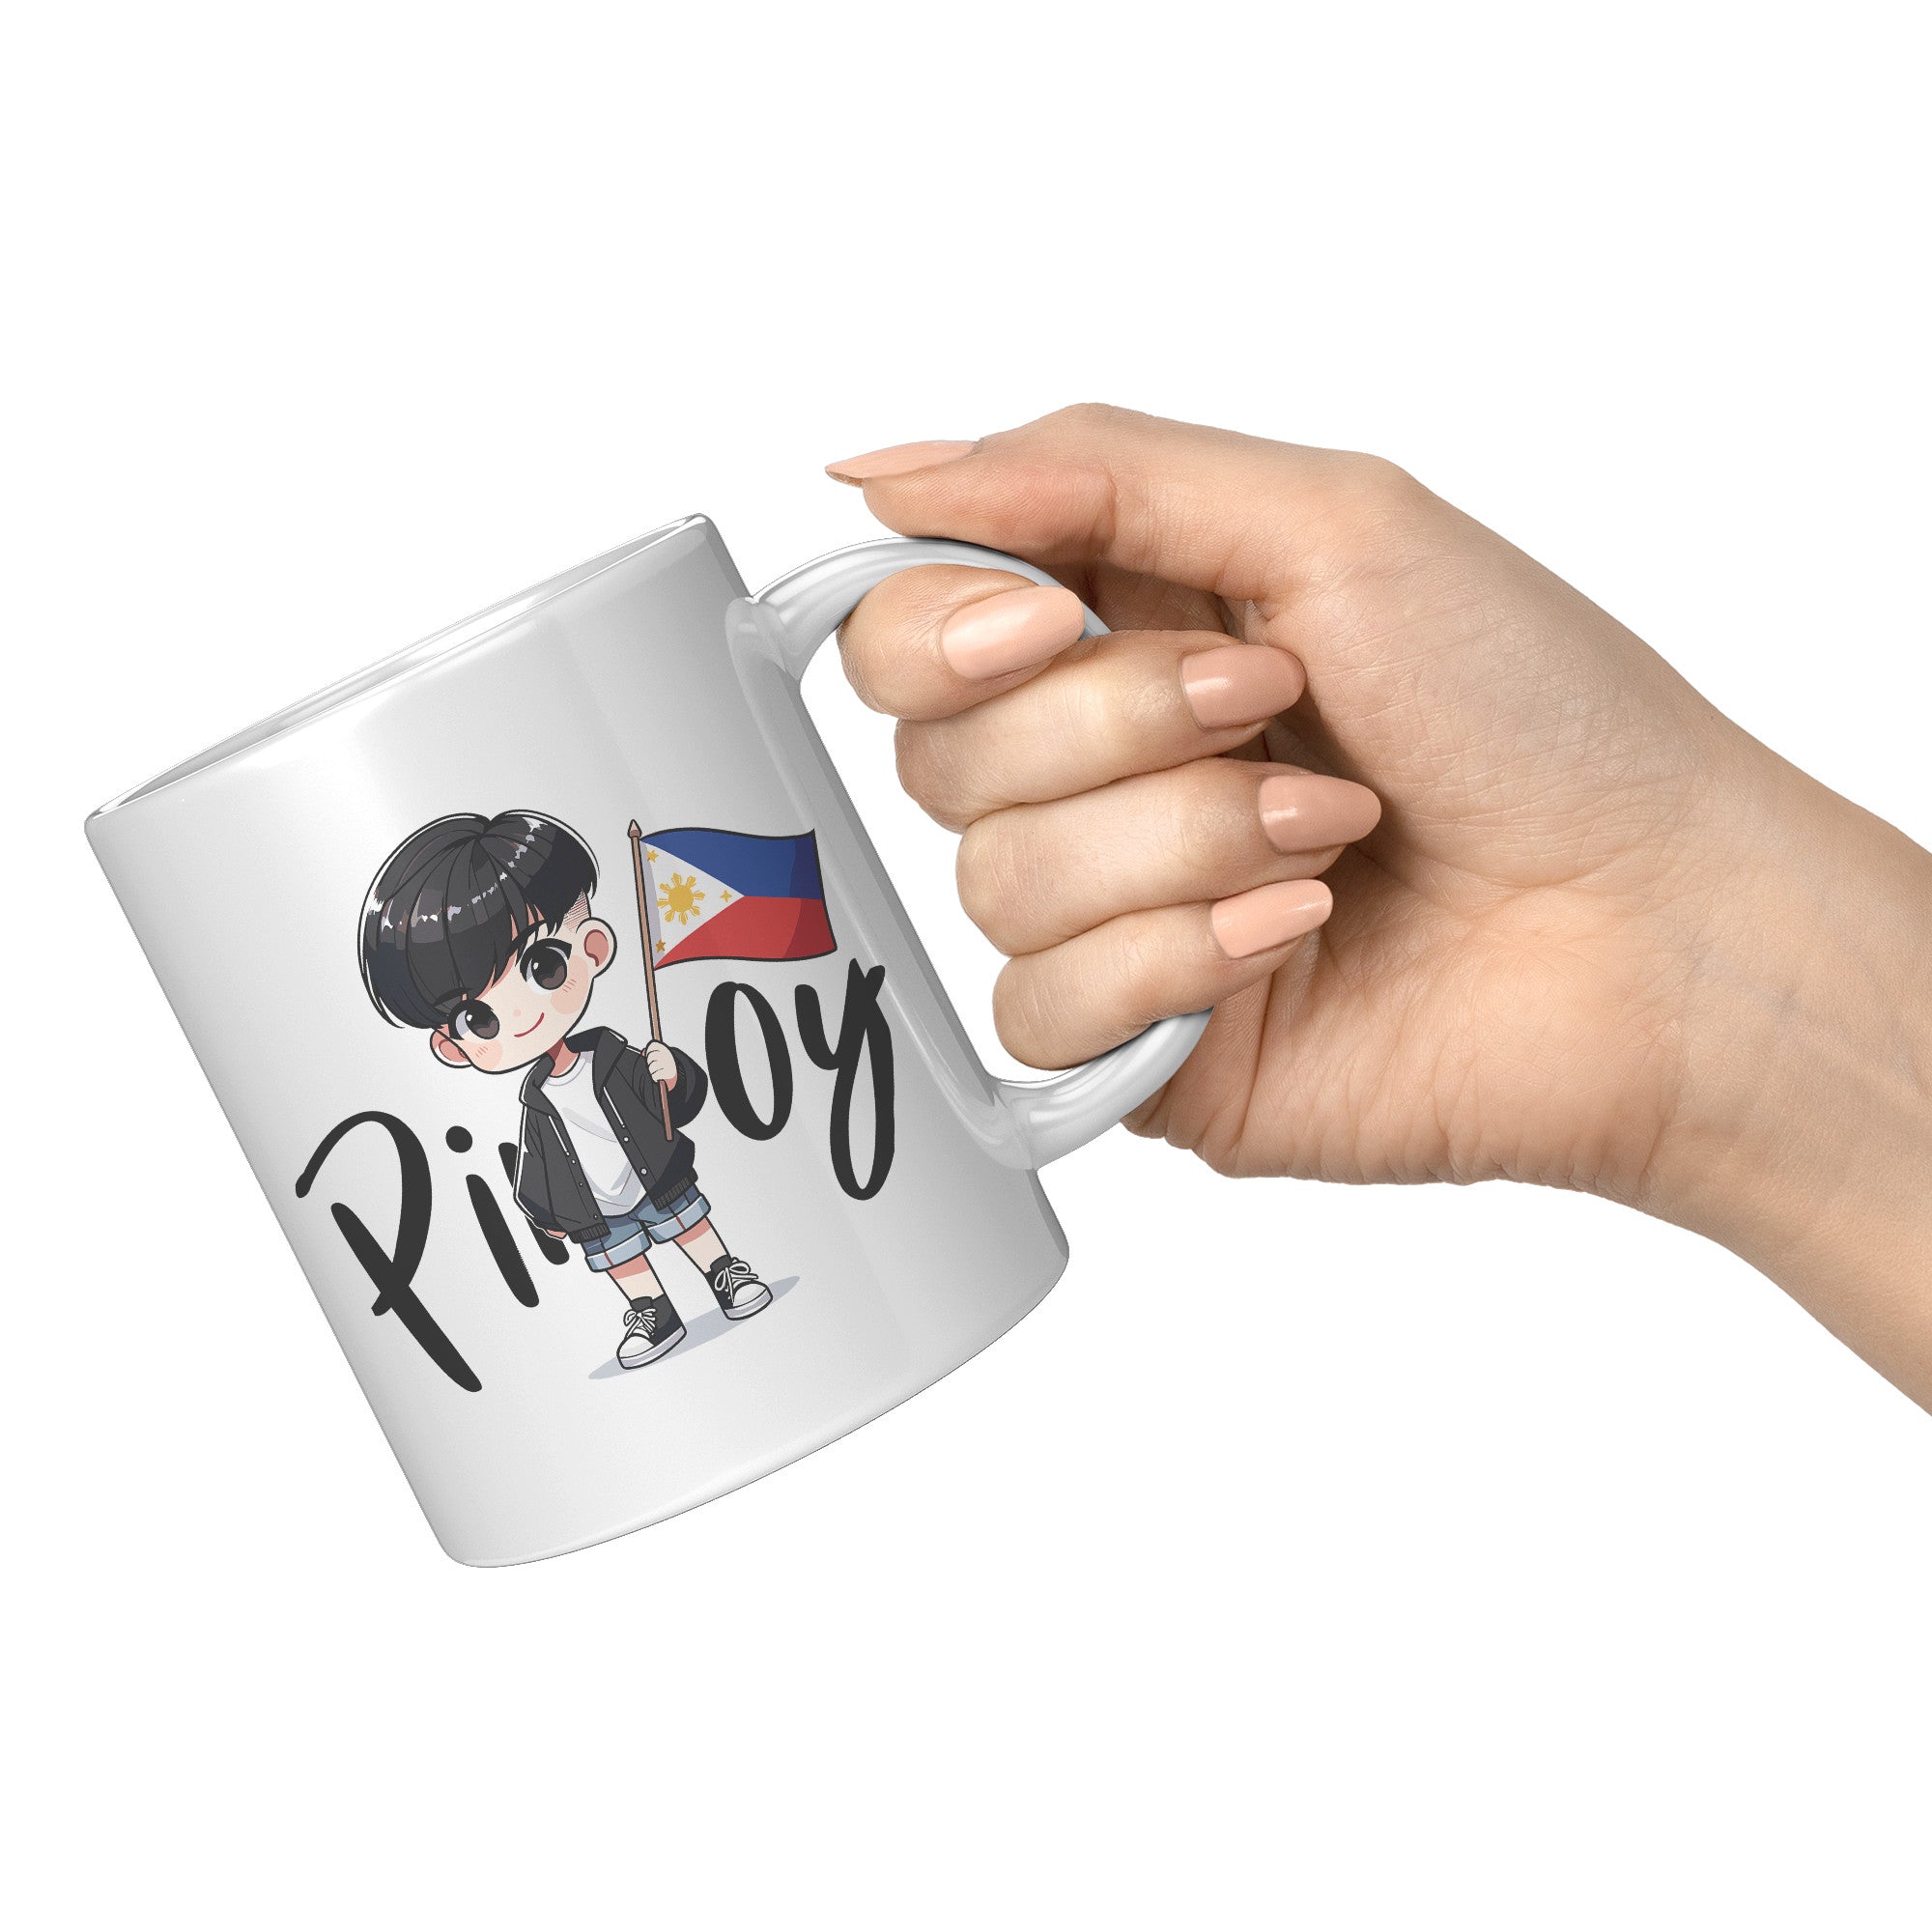 "Cute Cartoon Filipino Pride Coffee Mug - Vibrant Pinoy Pride Cup - Perfect Gift for Filipinos - Colorful Philippines Heritage Mug" - Q